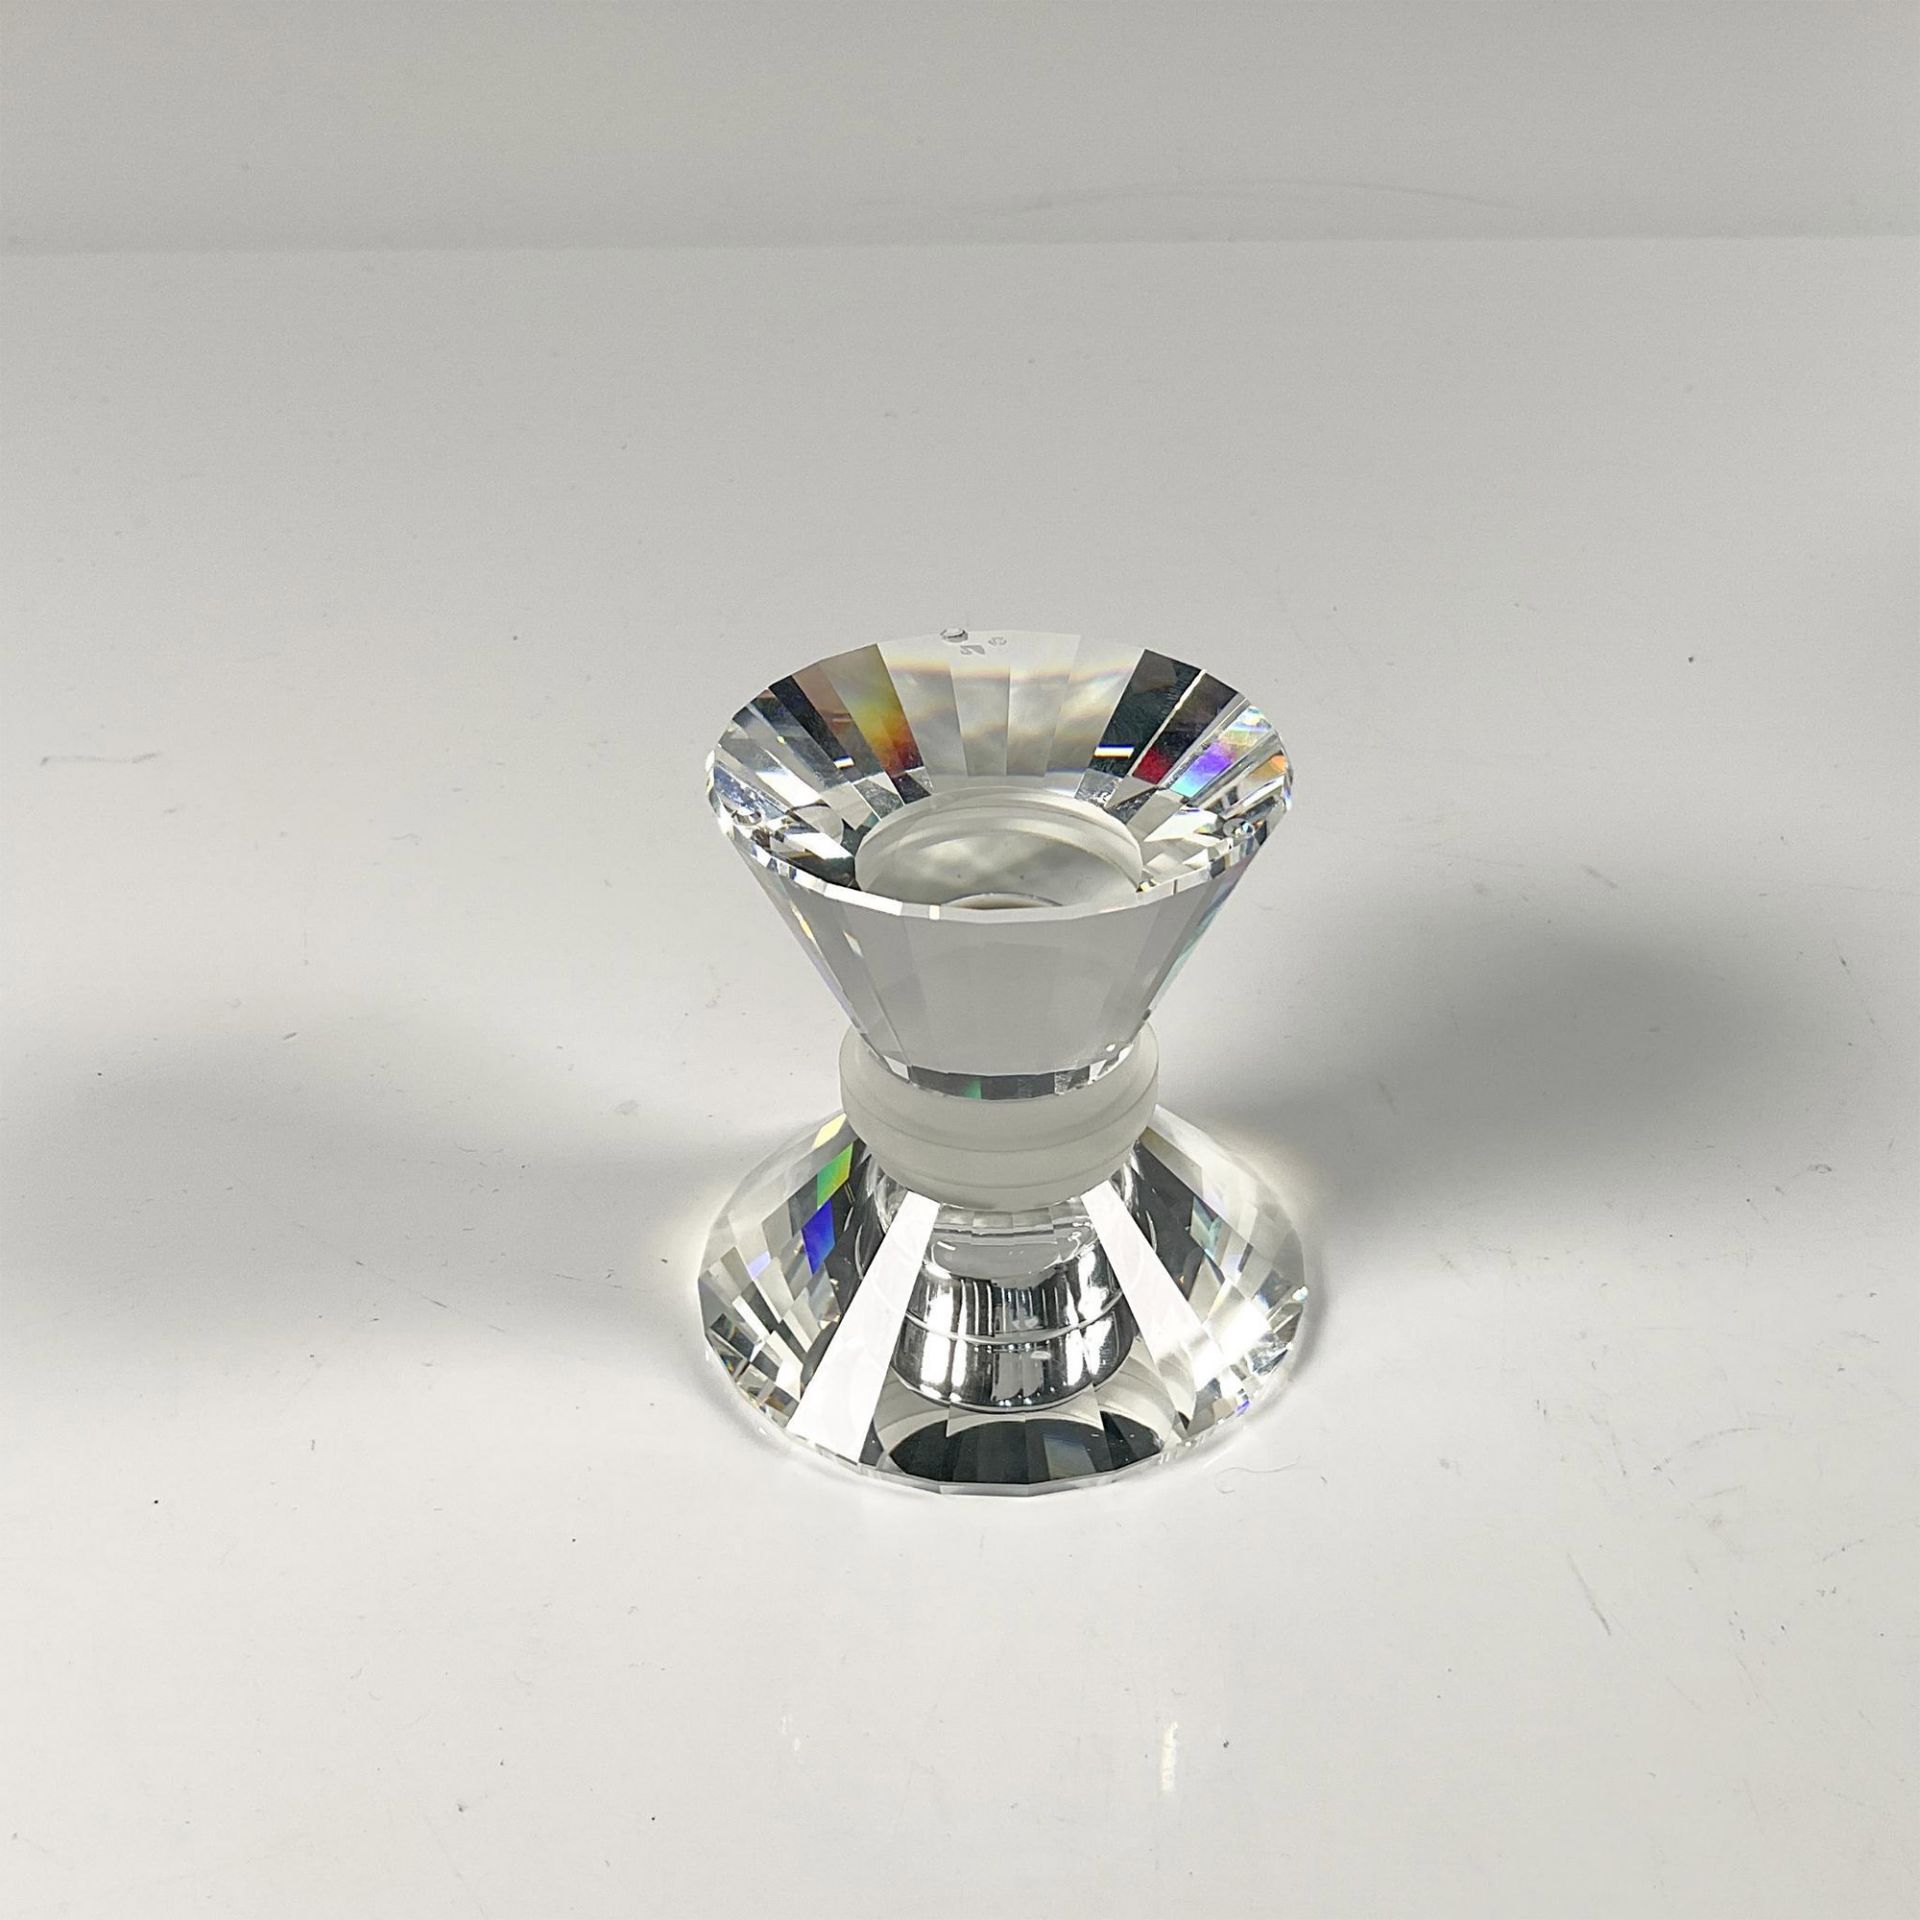 Swarovski Lead Crystal Candleholder - Image 2 of 4